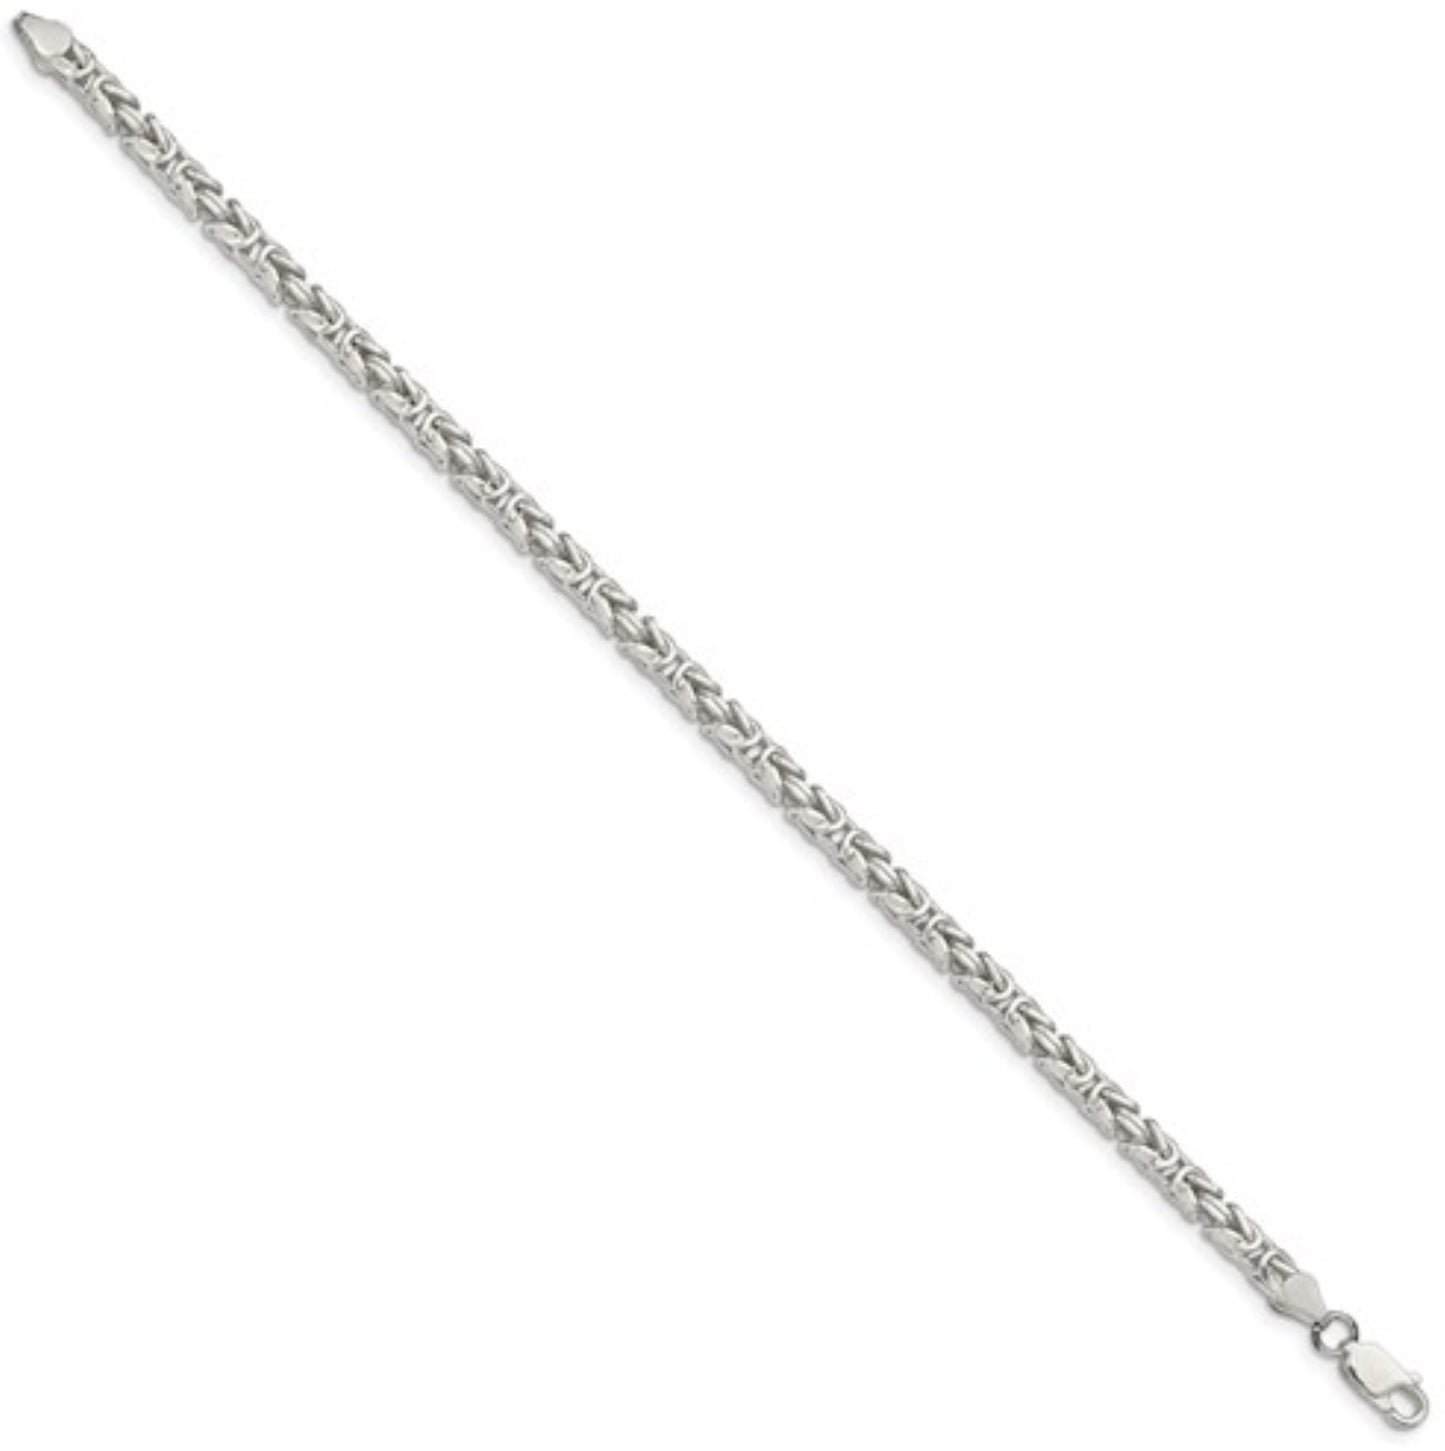 Sterling Silver 3.25mm Byzantine Chain Bracelet